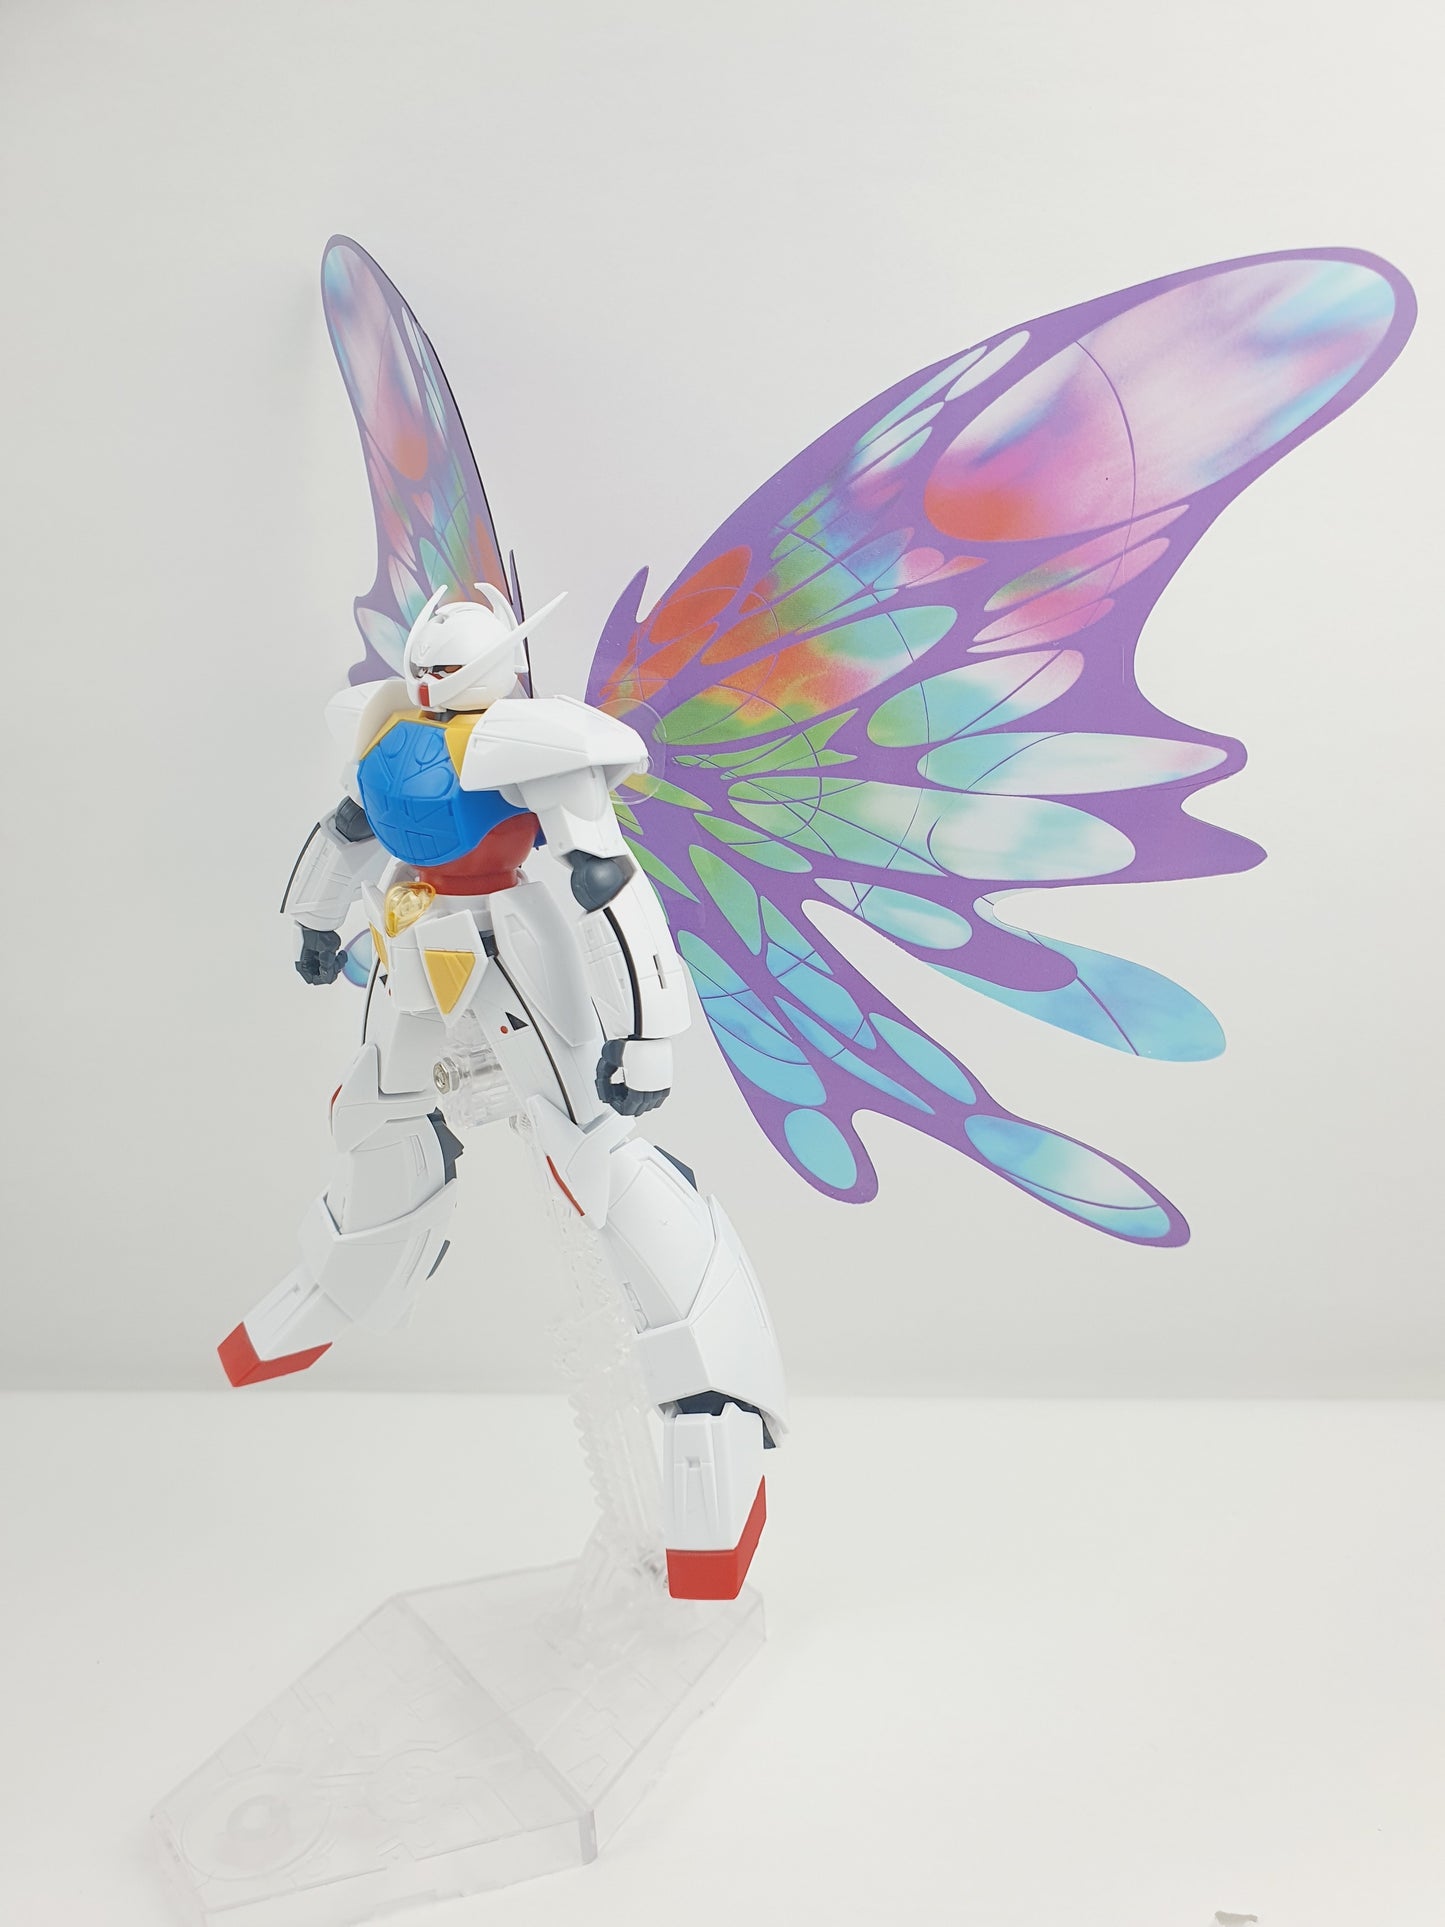 HG Turn A Gundam Moonlight Butterfly Wing Effect Parts Set